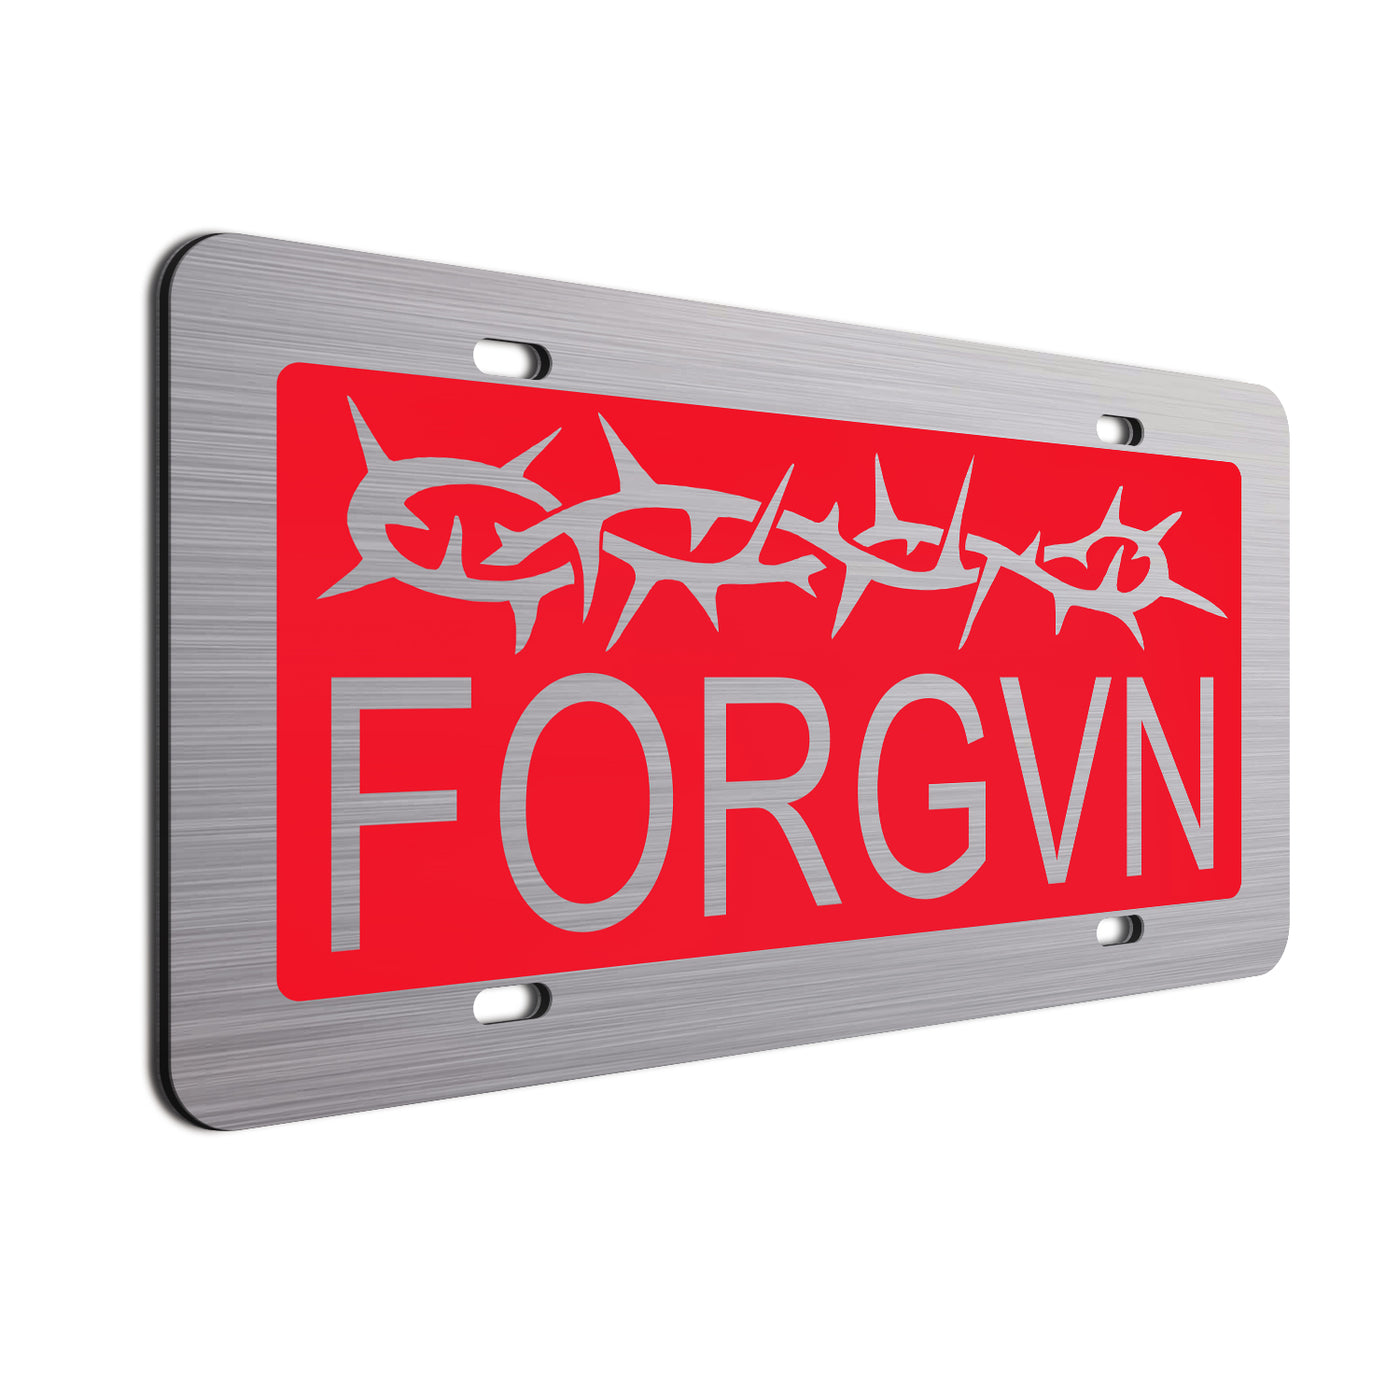 Forgiven Car Tag Red